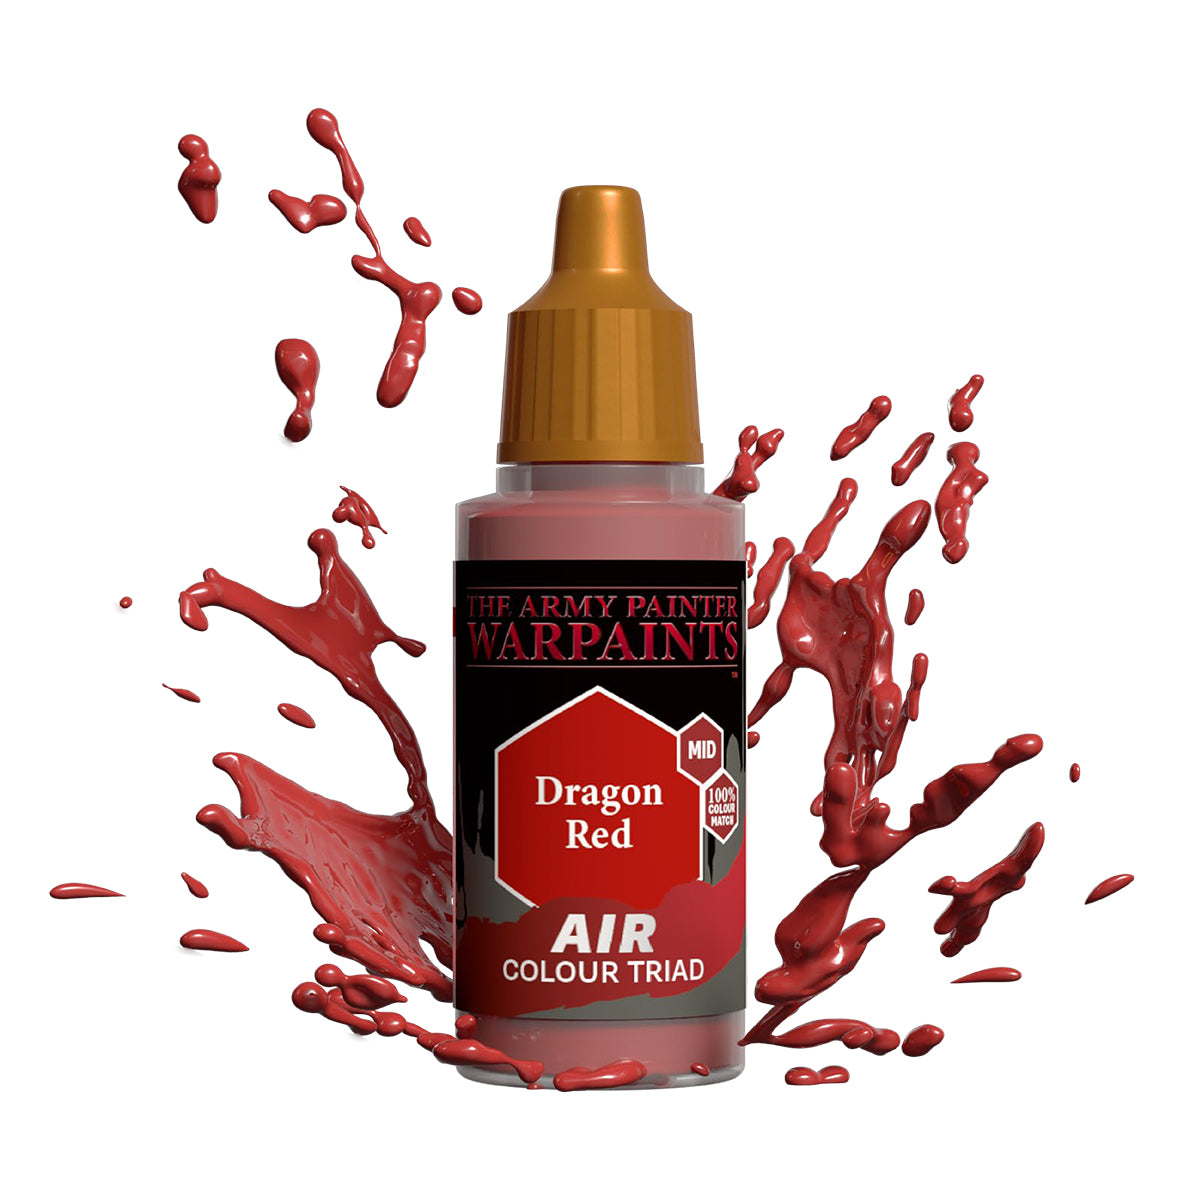 Warpaints Air: Dragon Red